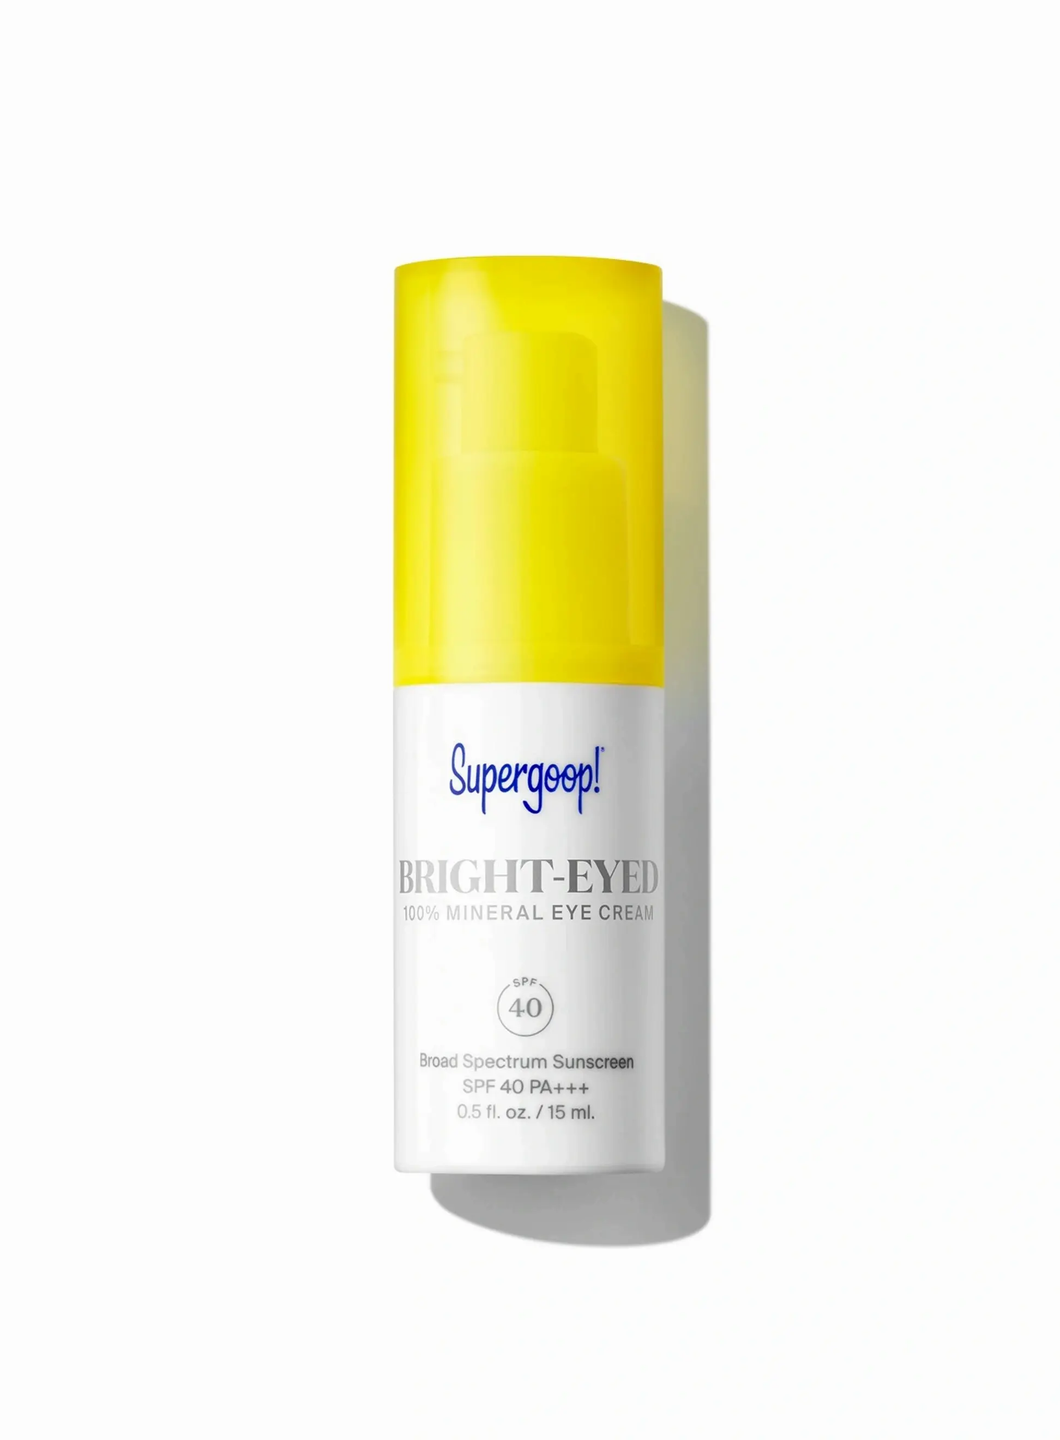 Bright-Eyed 100% Mineral Eye Cream SPF 40  0.5 fl.oz.